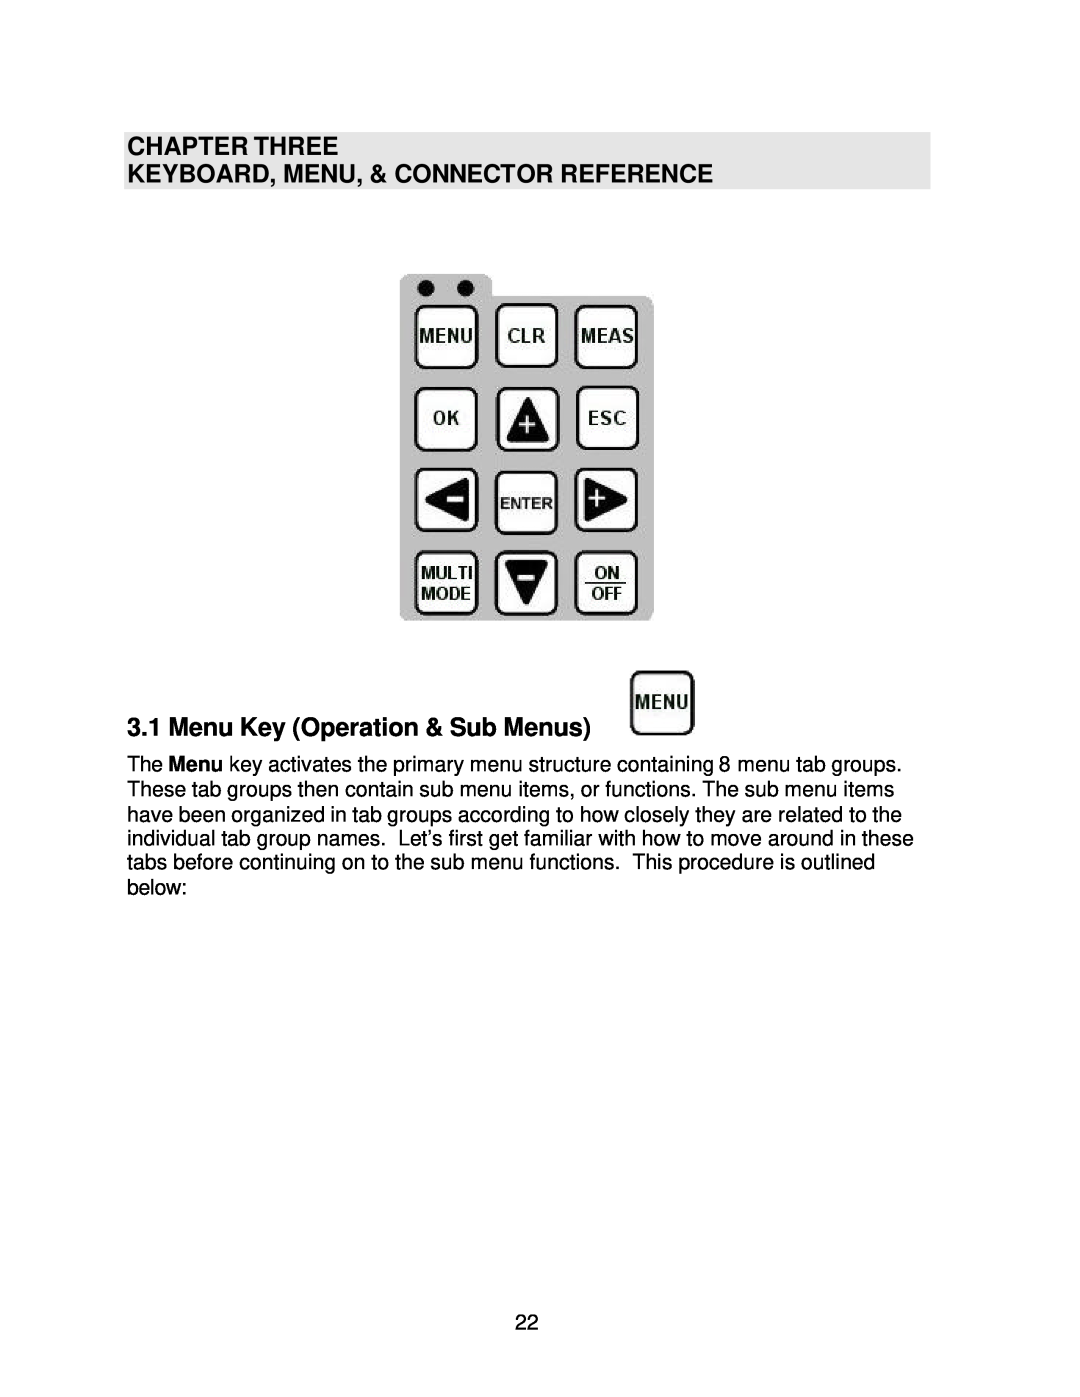 Dakota Digital CMX operation manual Chapter Three Keyboard, Menu, & Connector Reference, Menu Key Operation & Sub Menus 